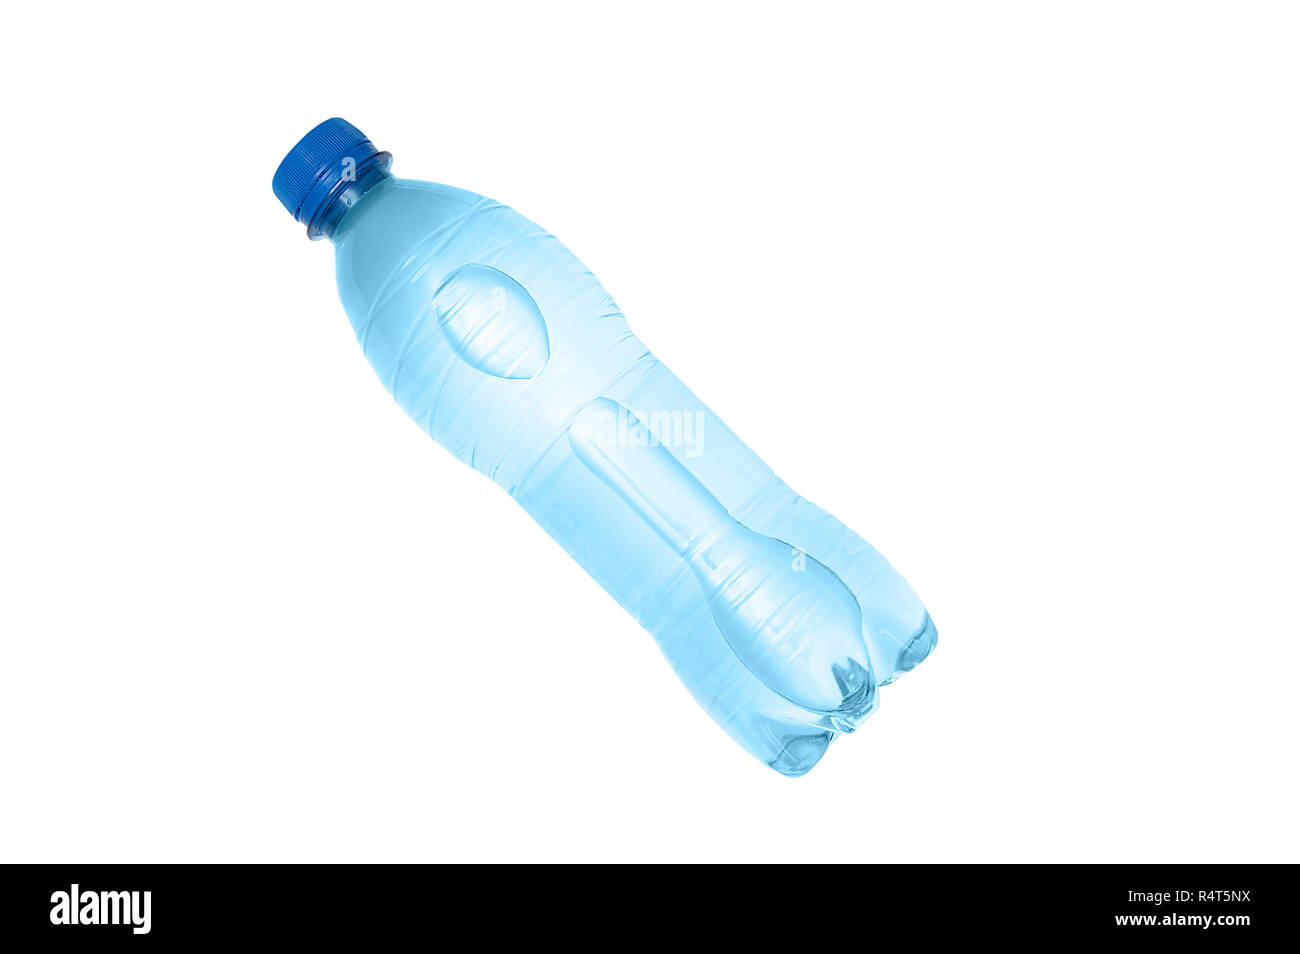 https://c8.alamy.com/compes/r4t5nx/botella-de-agua-de-plastico-aislar-blanco-r4t5nx.jpg